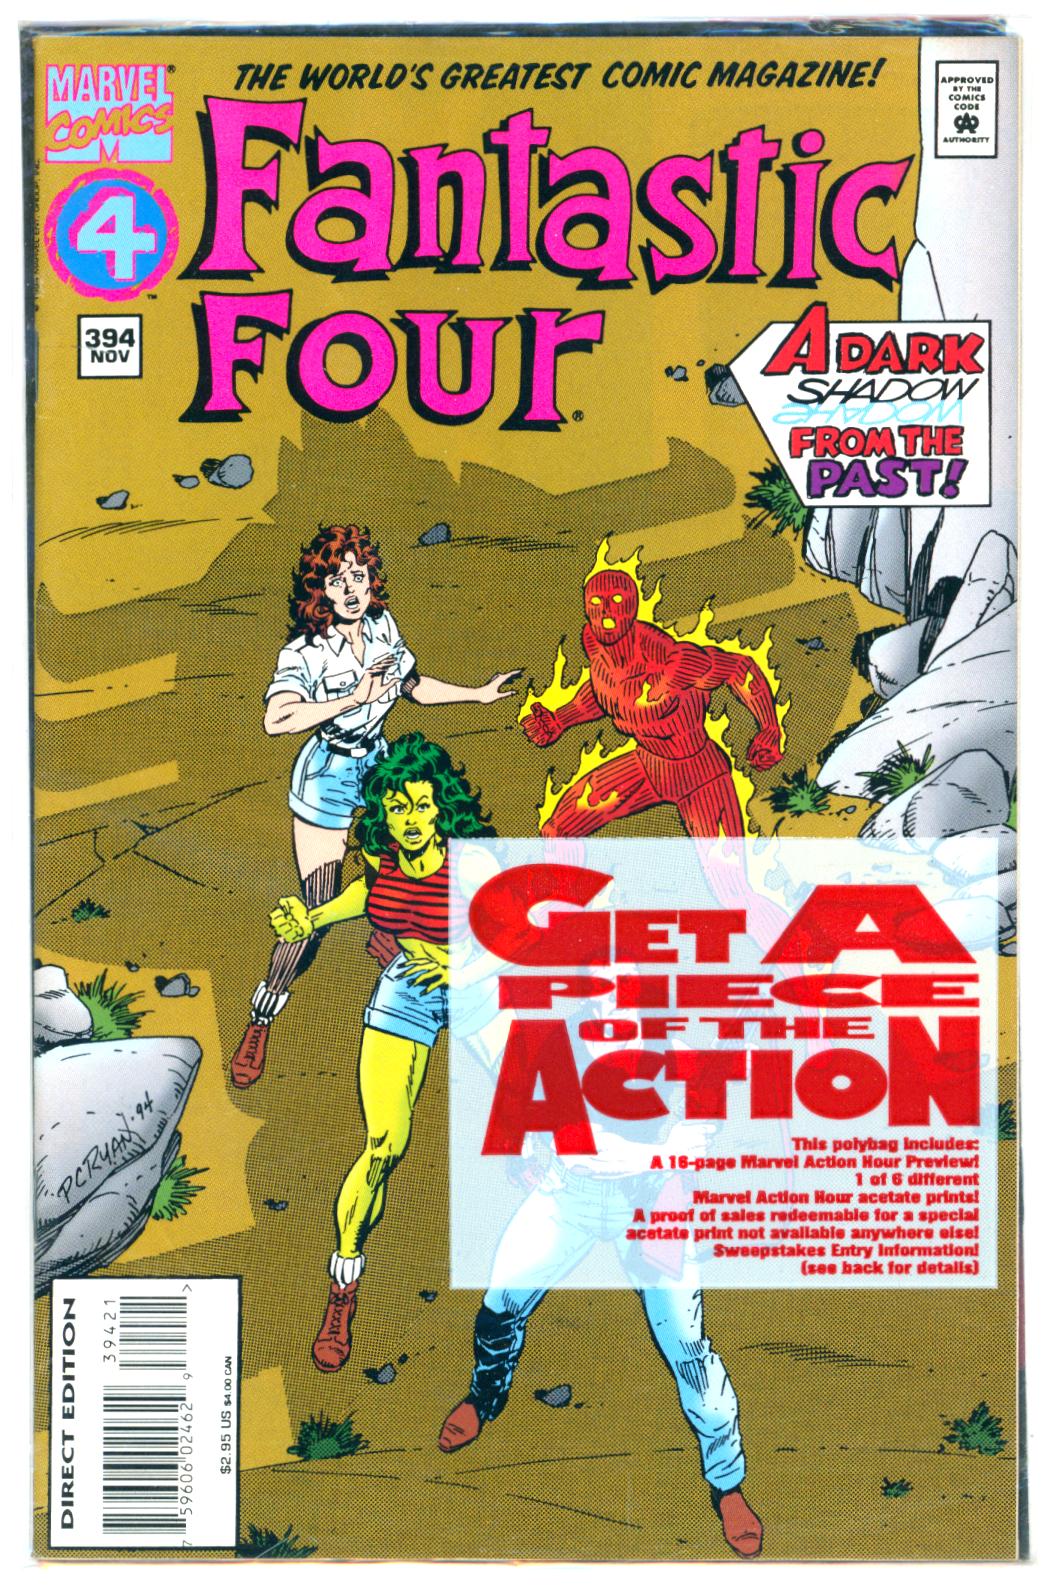 Fantastic Four #394